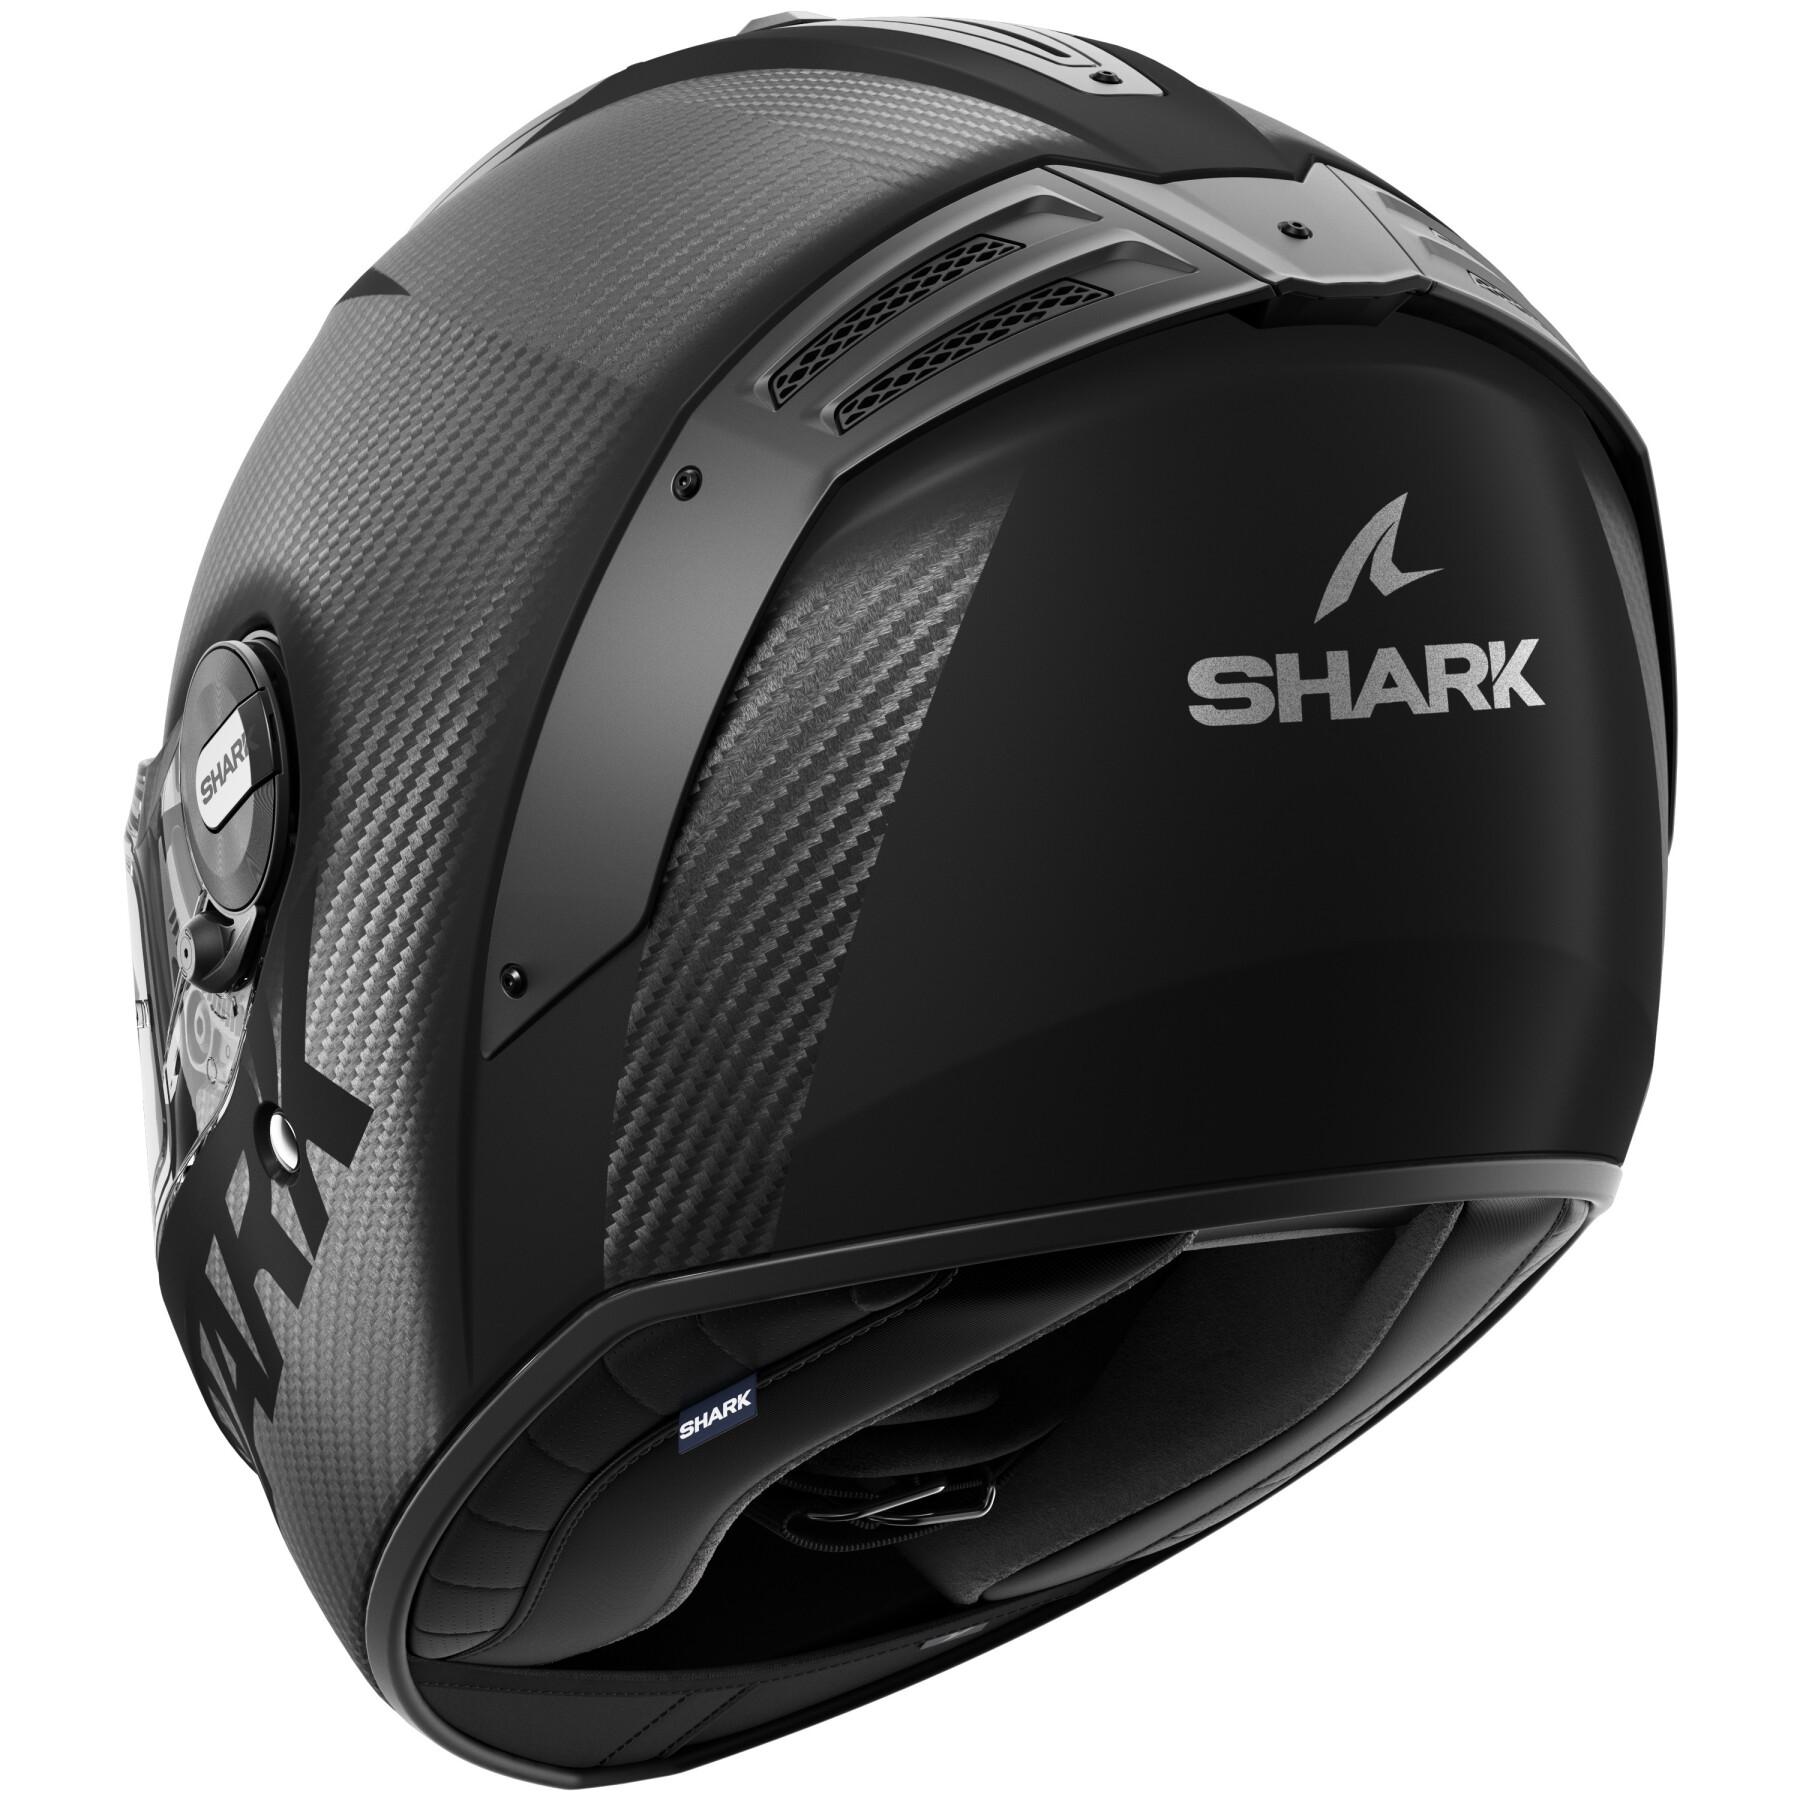 Full face motorcycle helmet Shark Spartan RS Carbon Skin